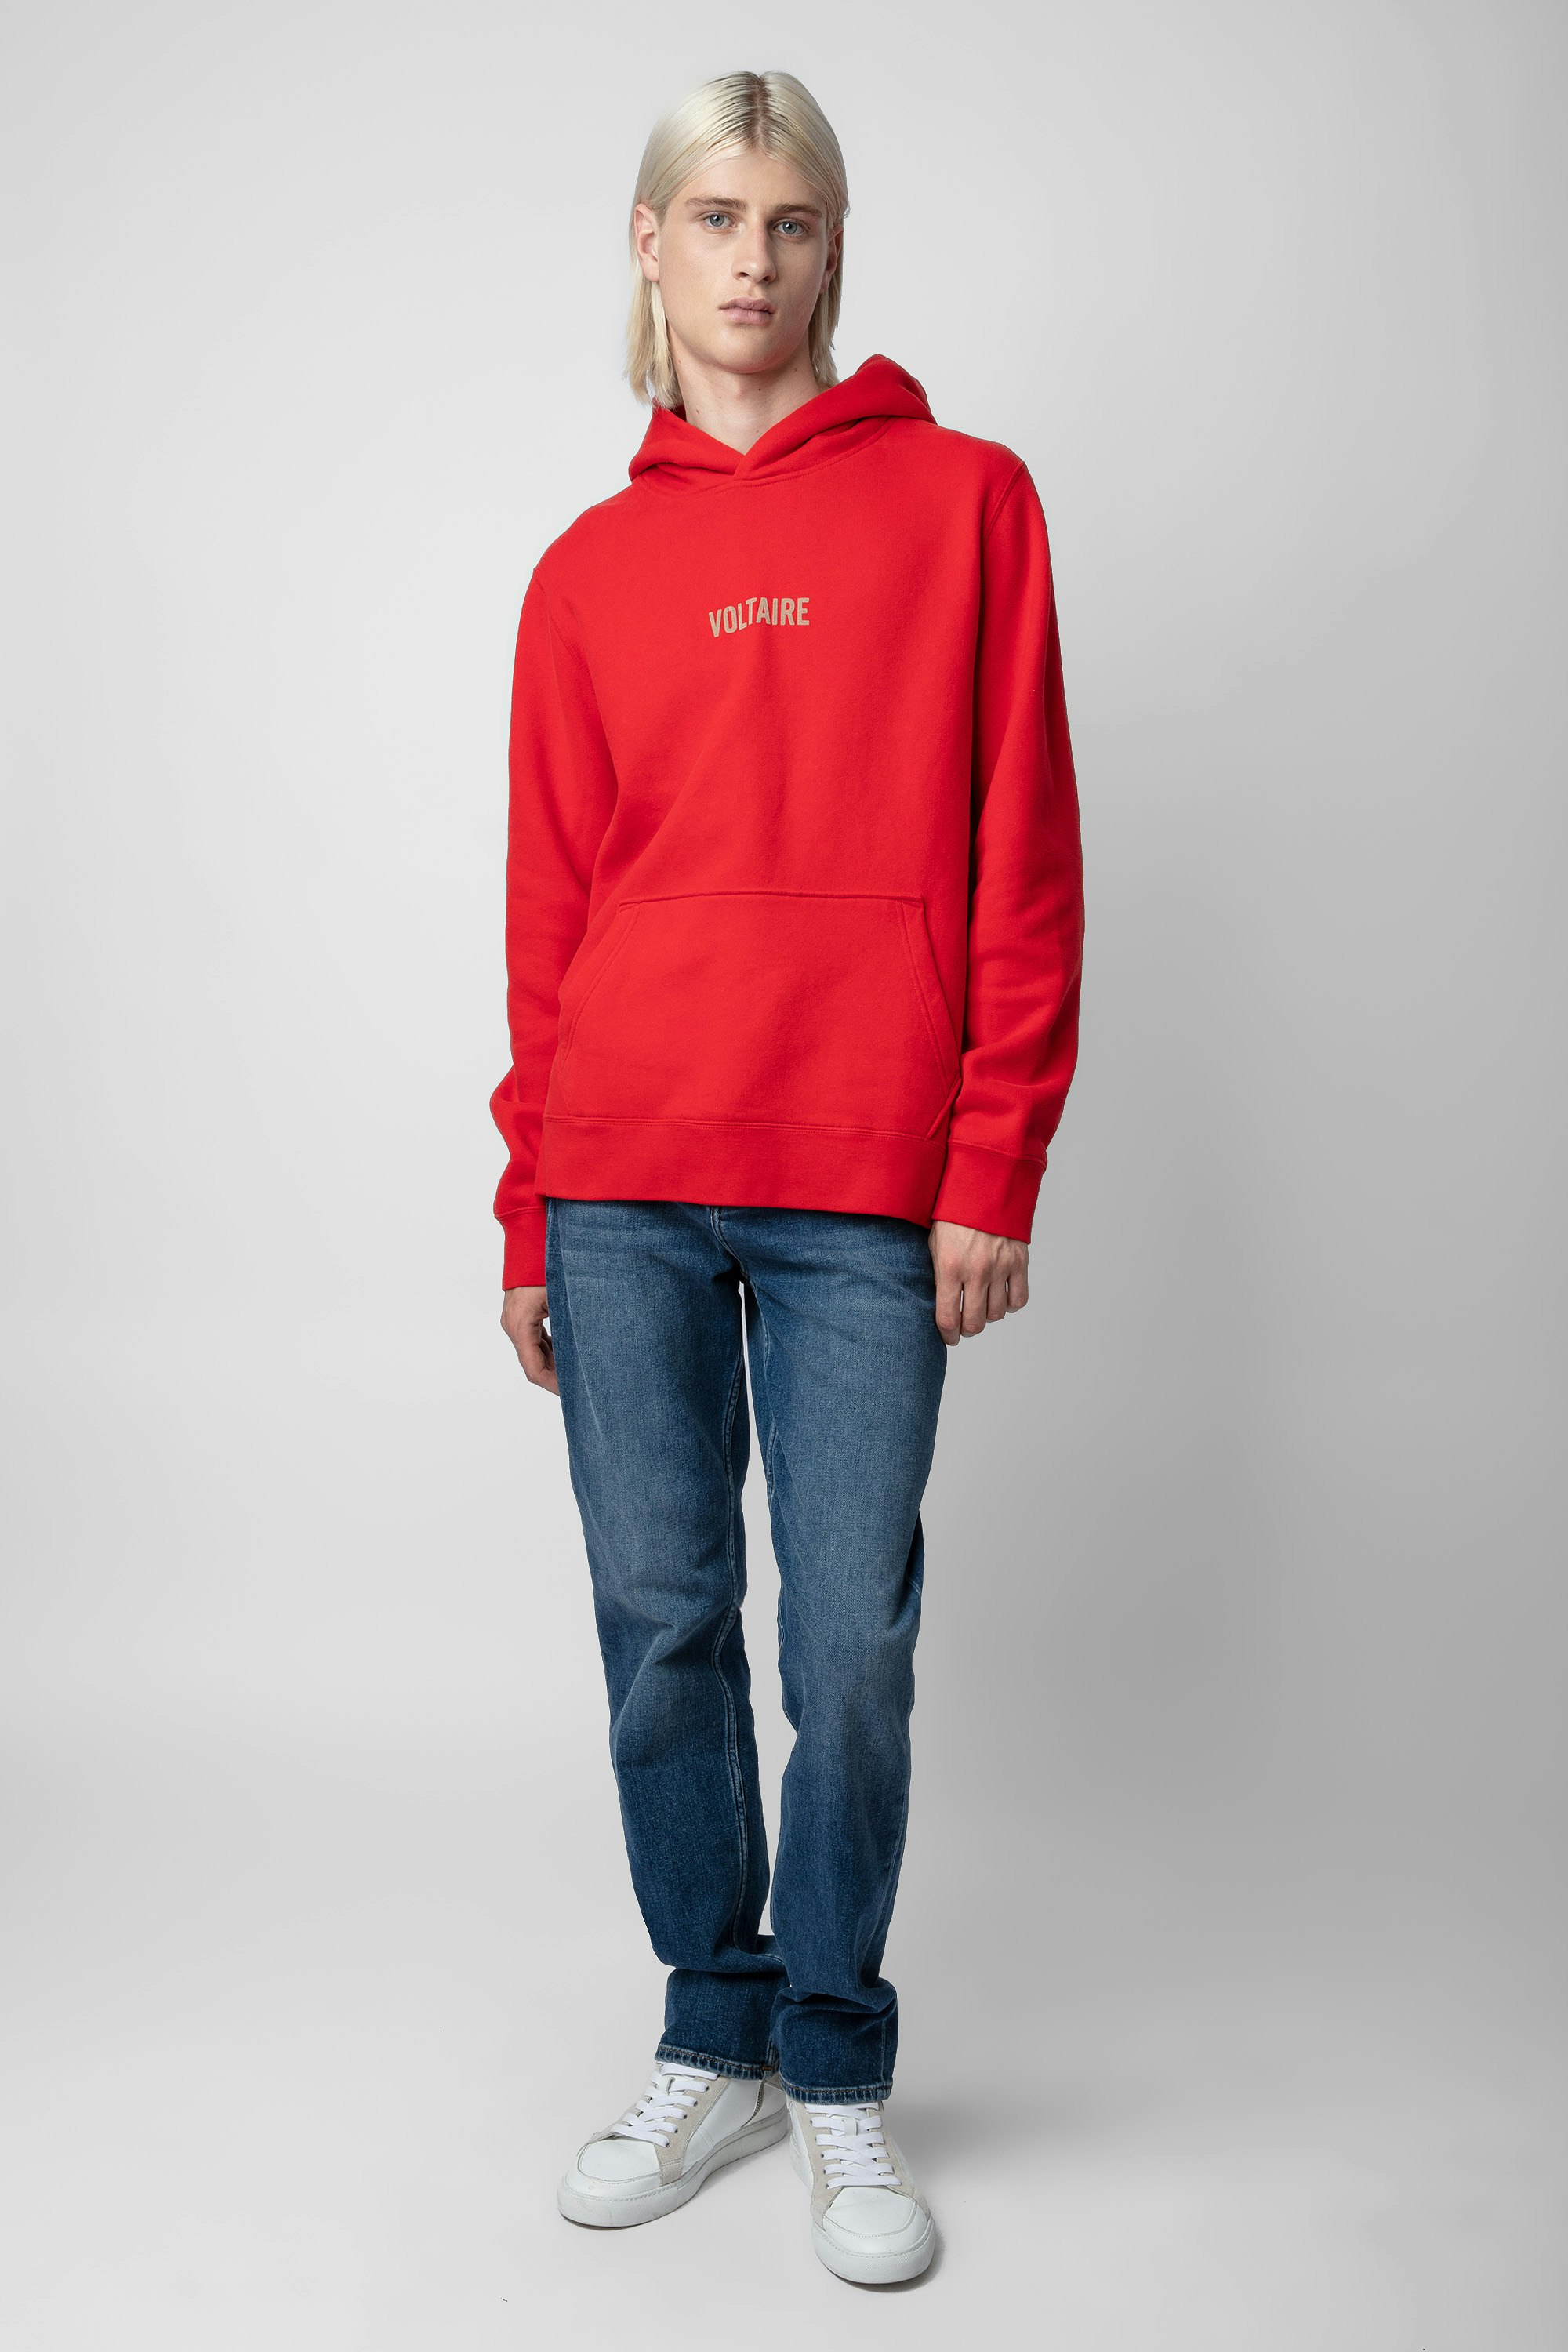 Sanchi Sweatshirt - Men’s red hoodie with Voltaire signature and arrow print.